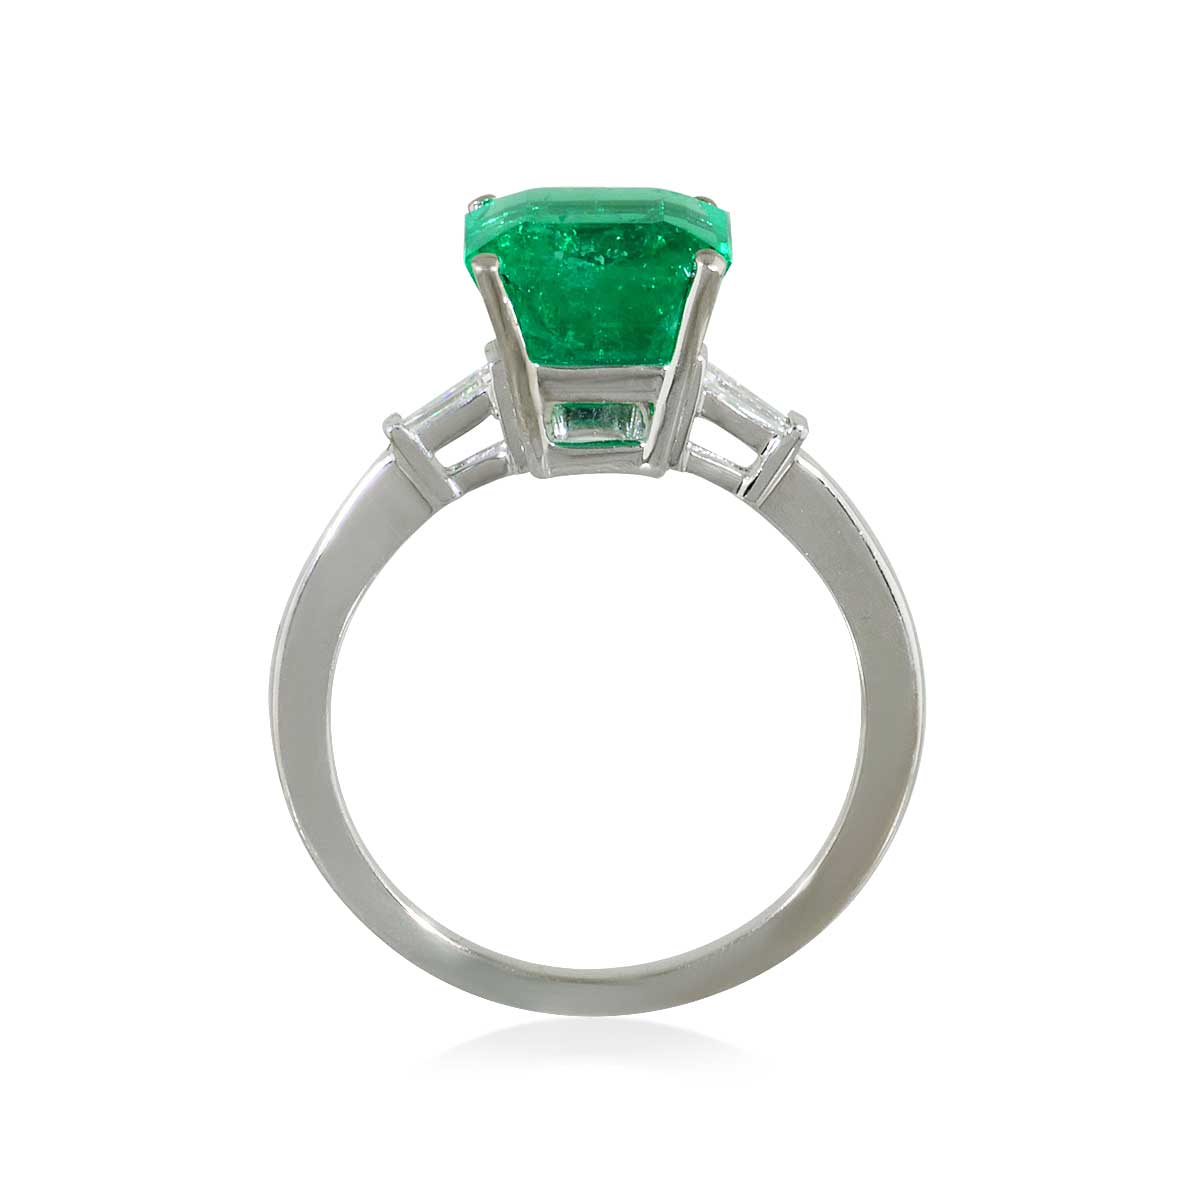 Muzo Smaragd|Smaragdring Diamantentrapezen, 2,93ct Kolumbianischer Smaragd aus Muzo, in Weißgold